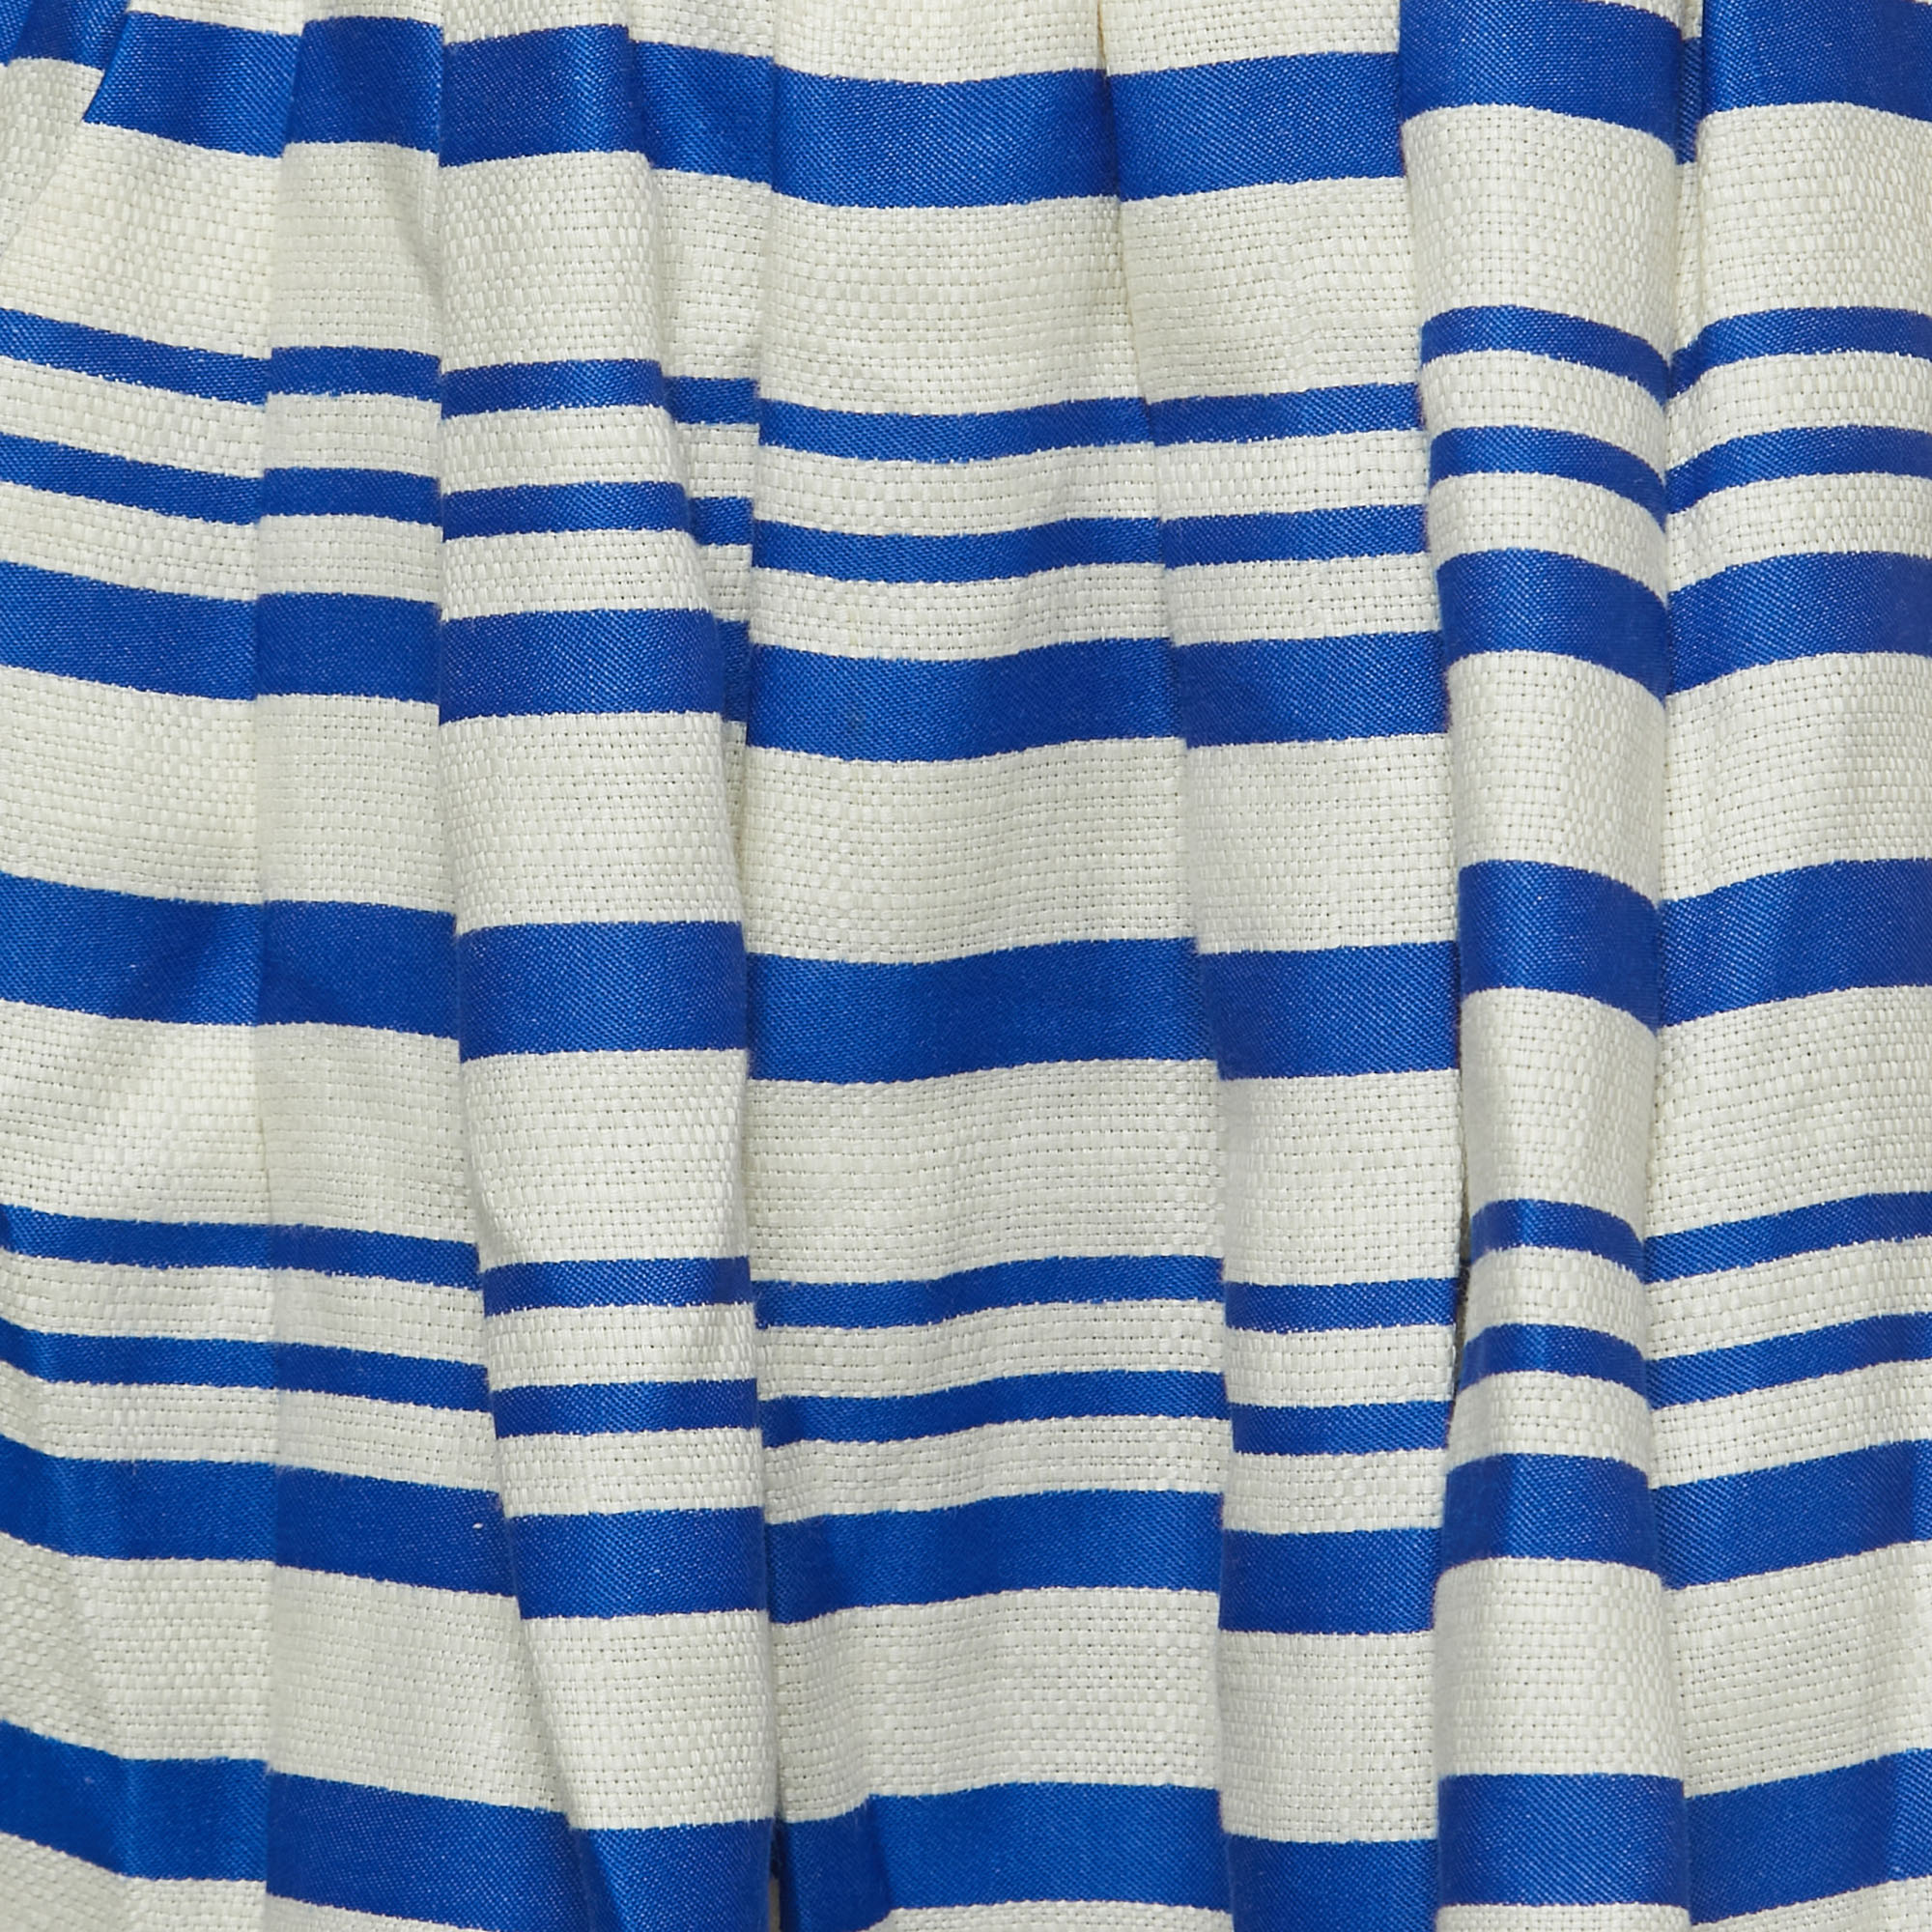 Dolce & Gabbana White/Blue Striped Linen Blend Mini Skirt XS